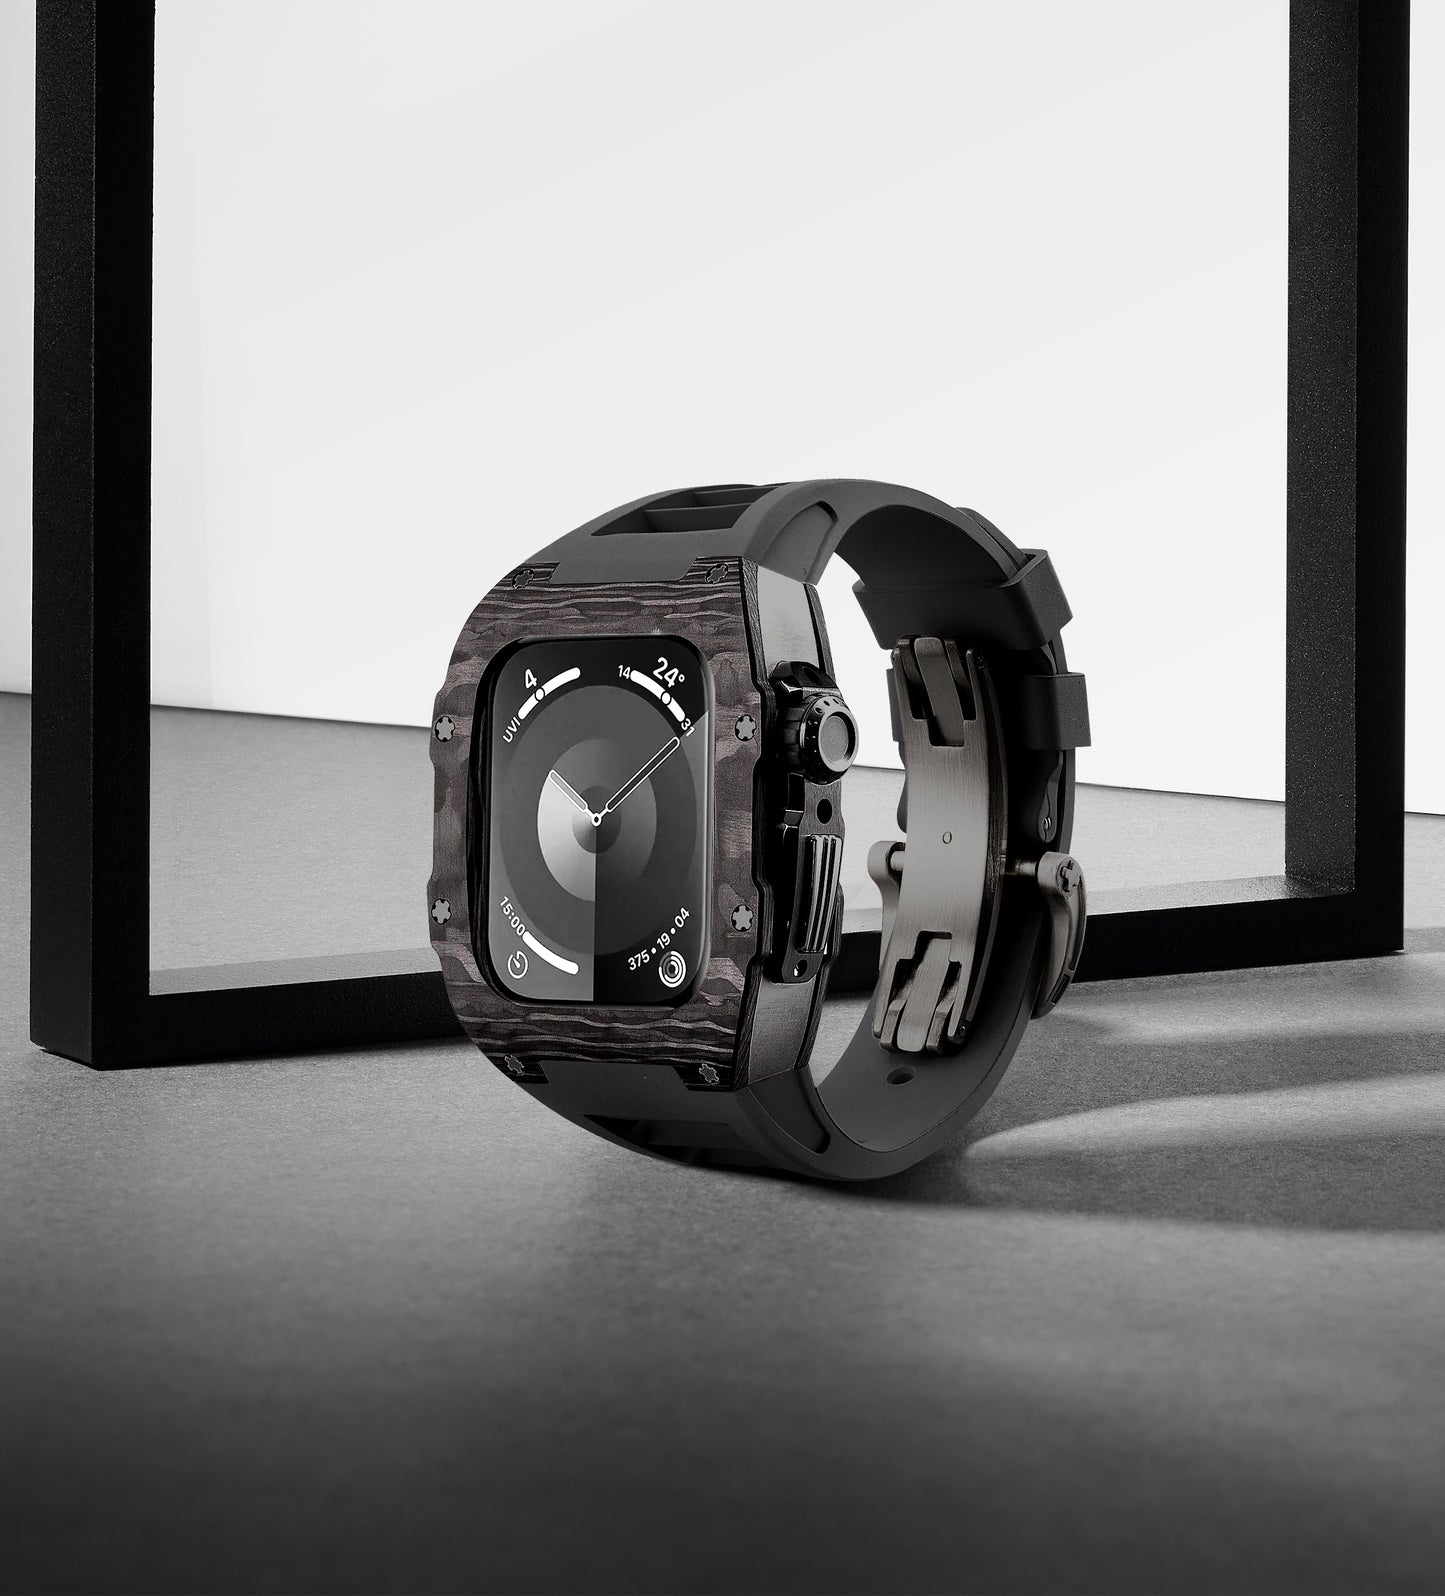 Apple Watch Case for Series 4/5/6/7/8/SE - Carbon Fiber Ti Case + Green Fluoro Strap